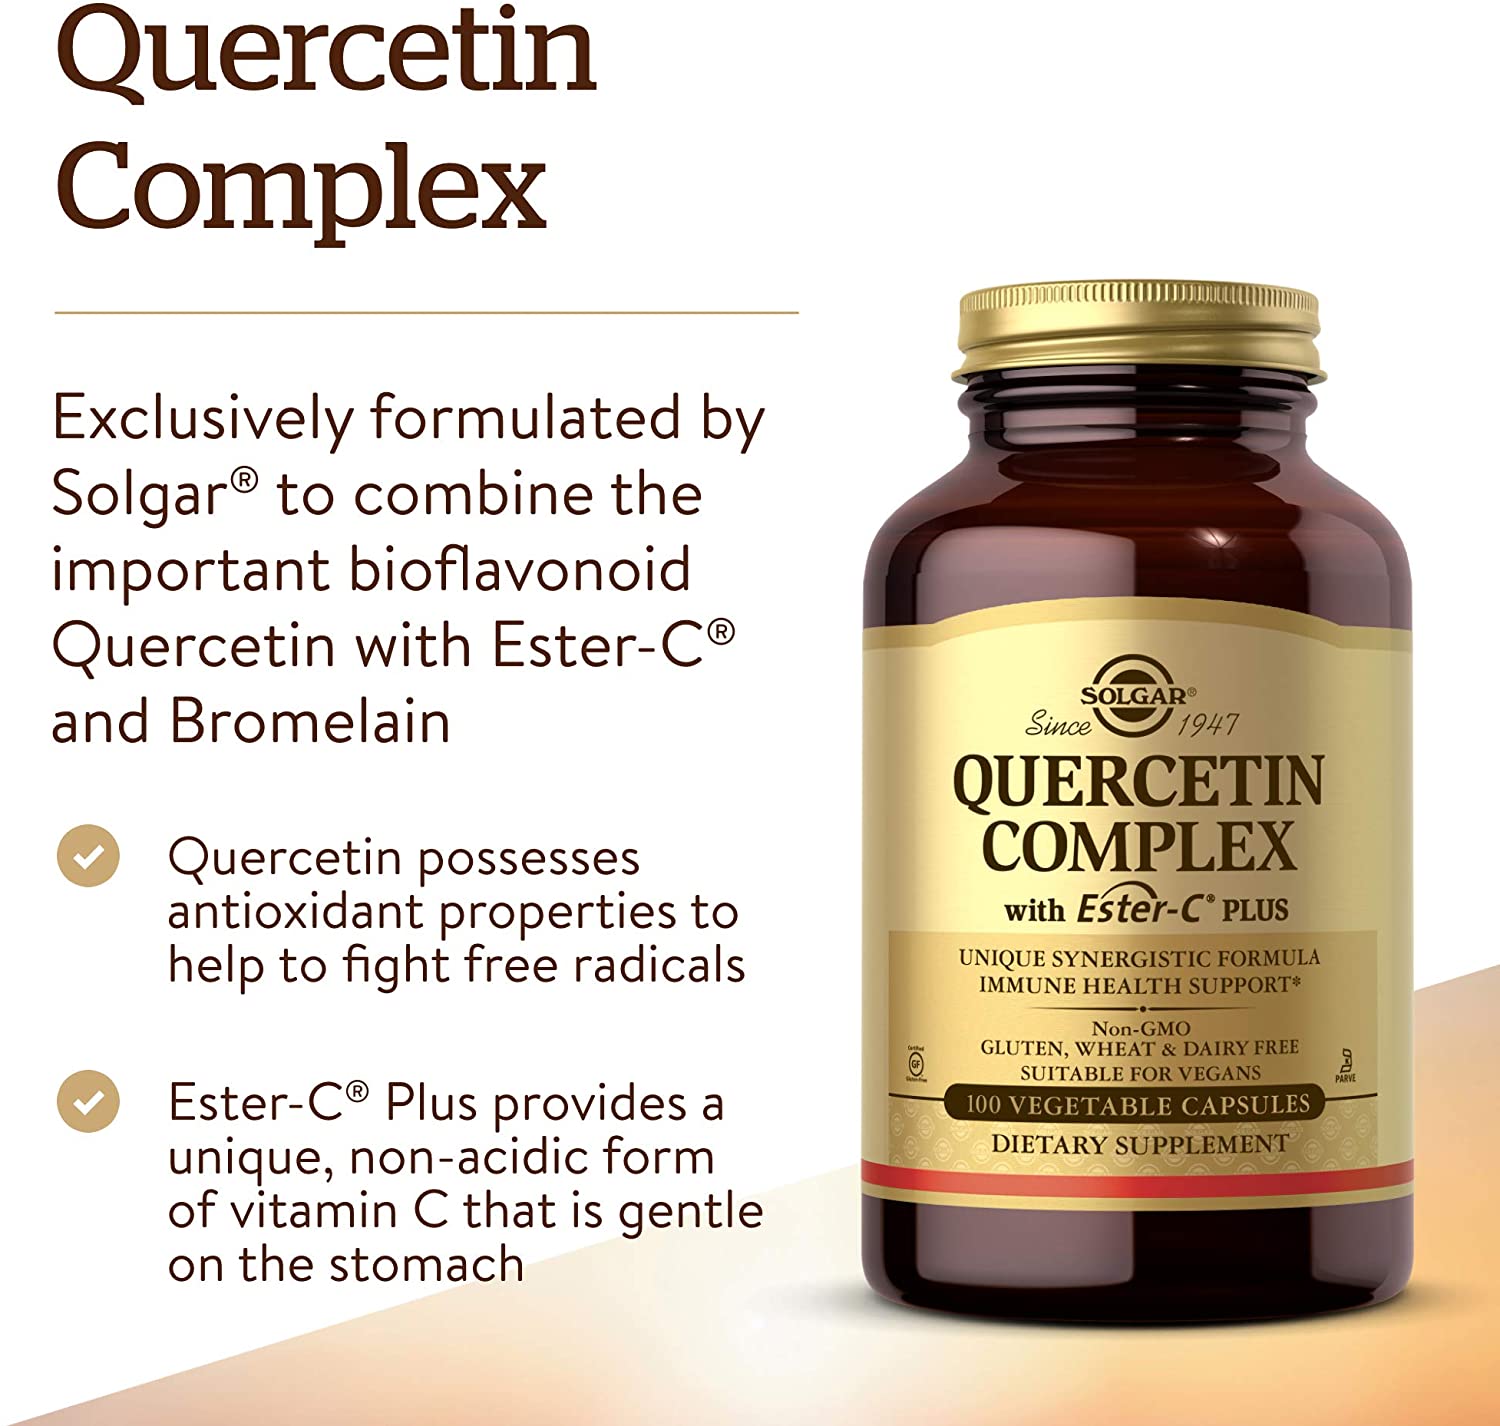  Quercetin Complex with Ester-C